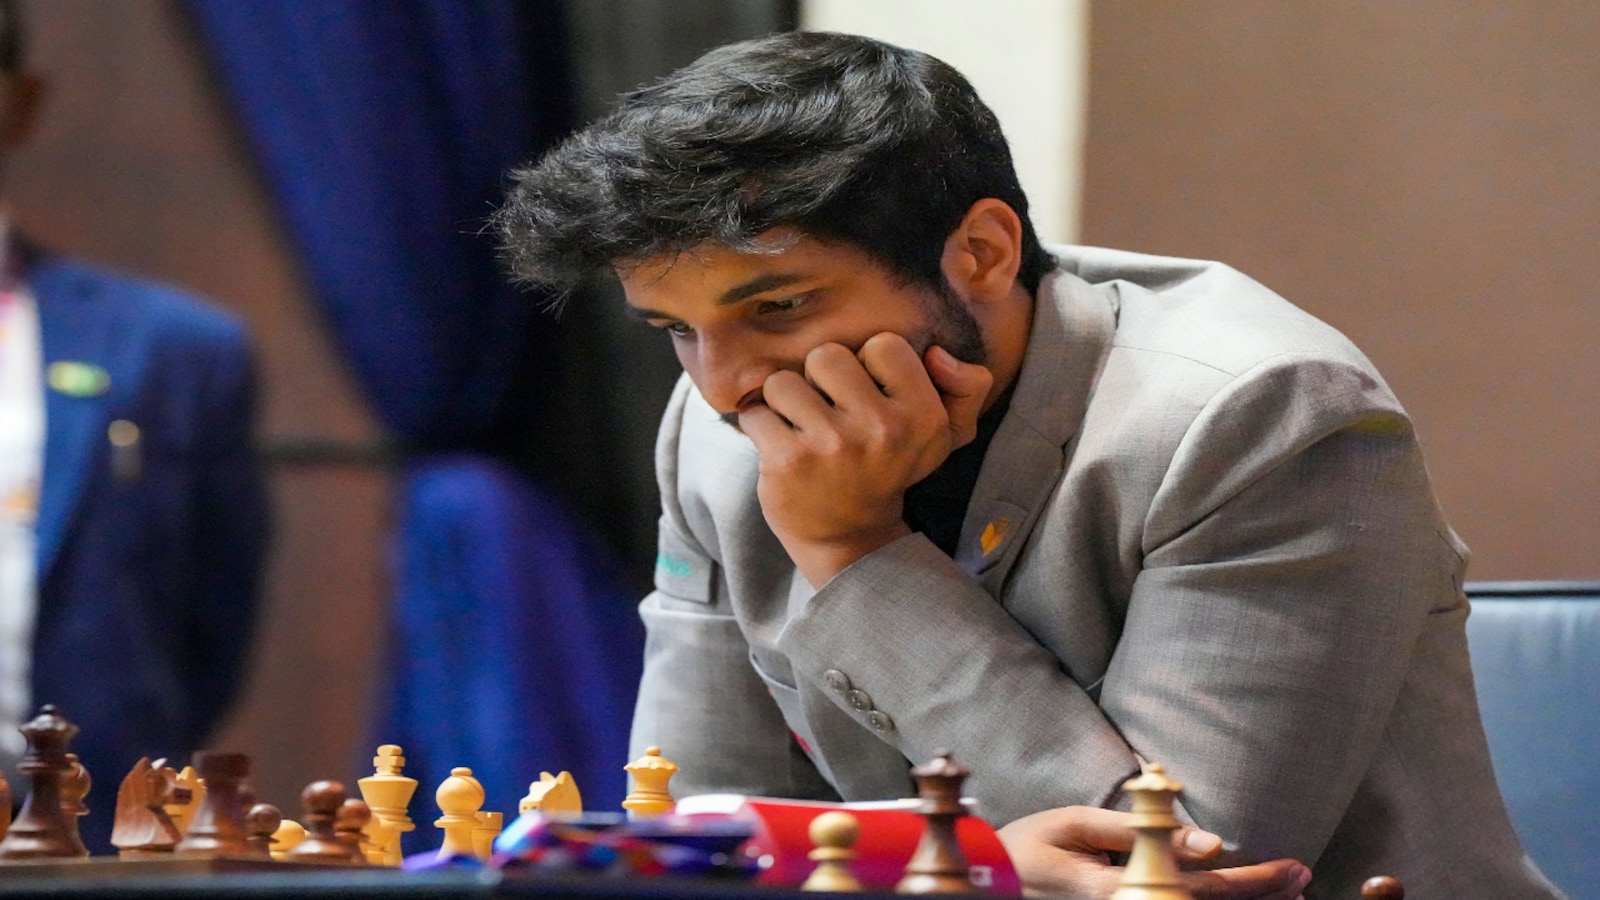 Tata Steel Masters (2023) chess event